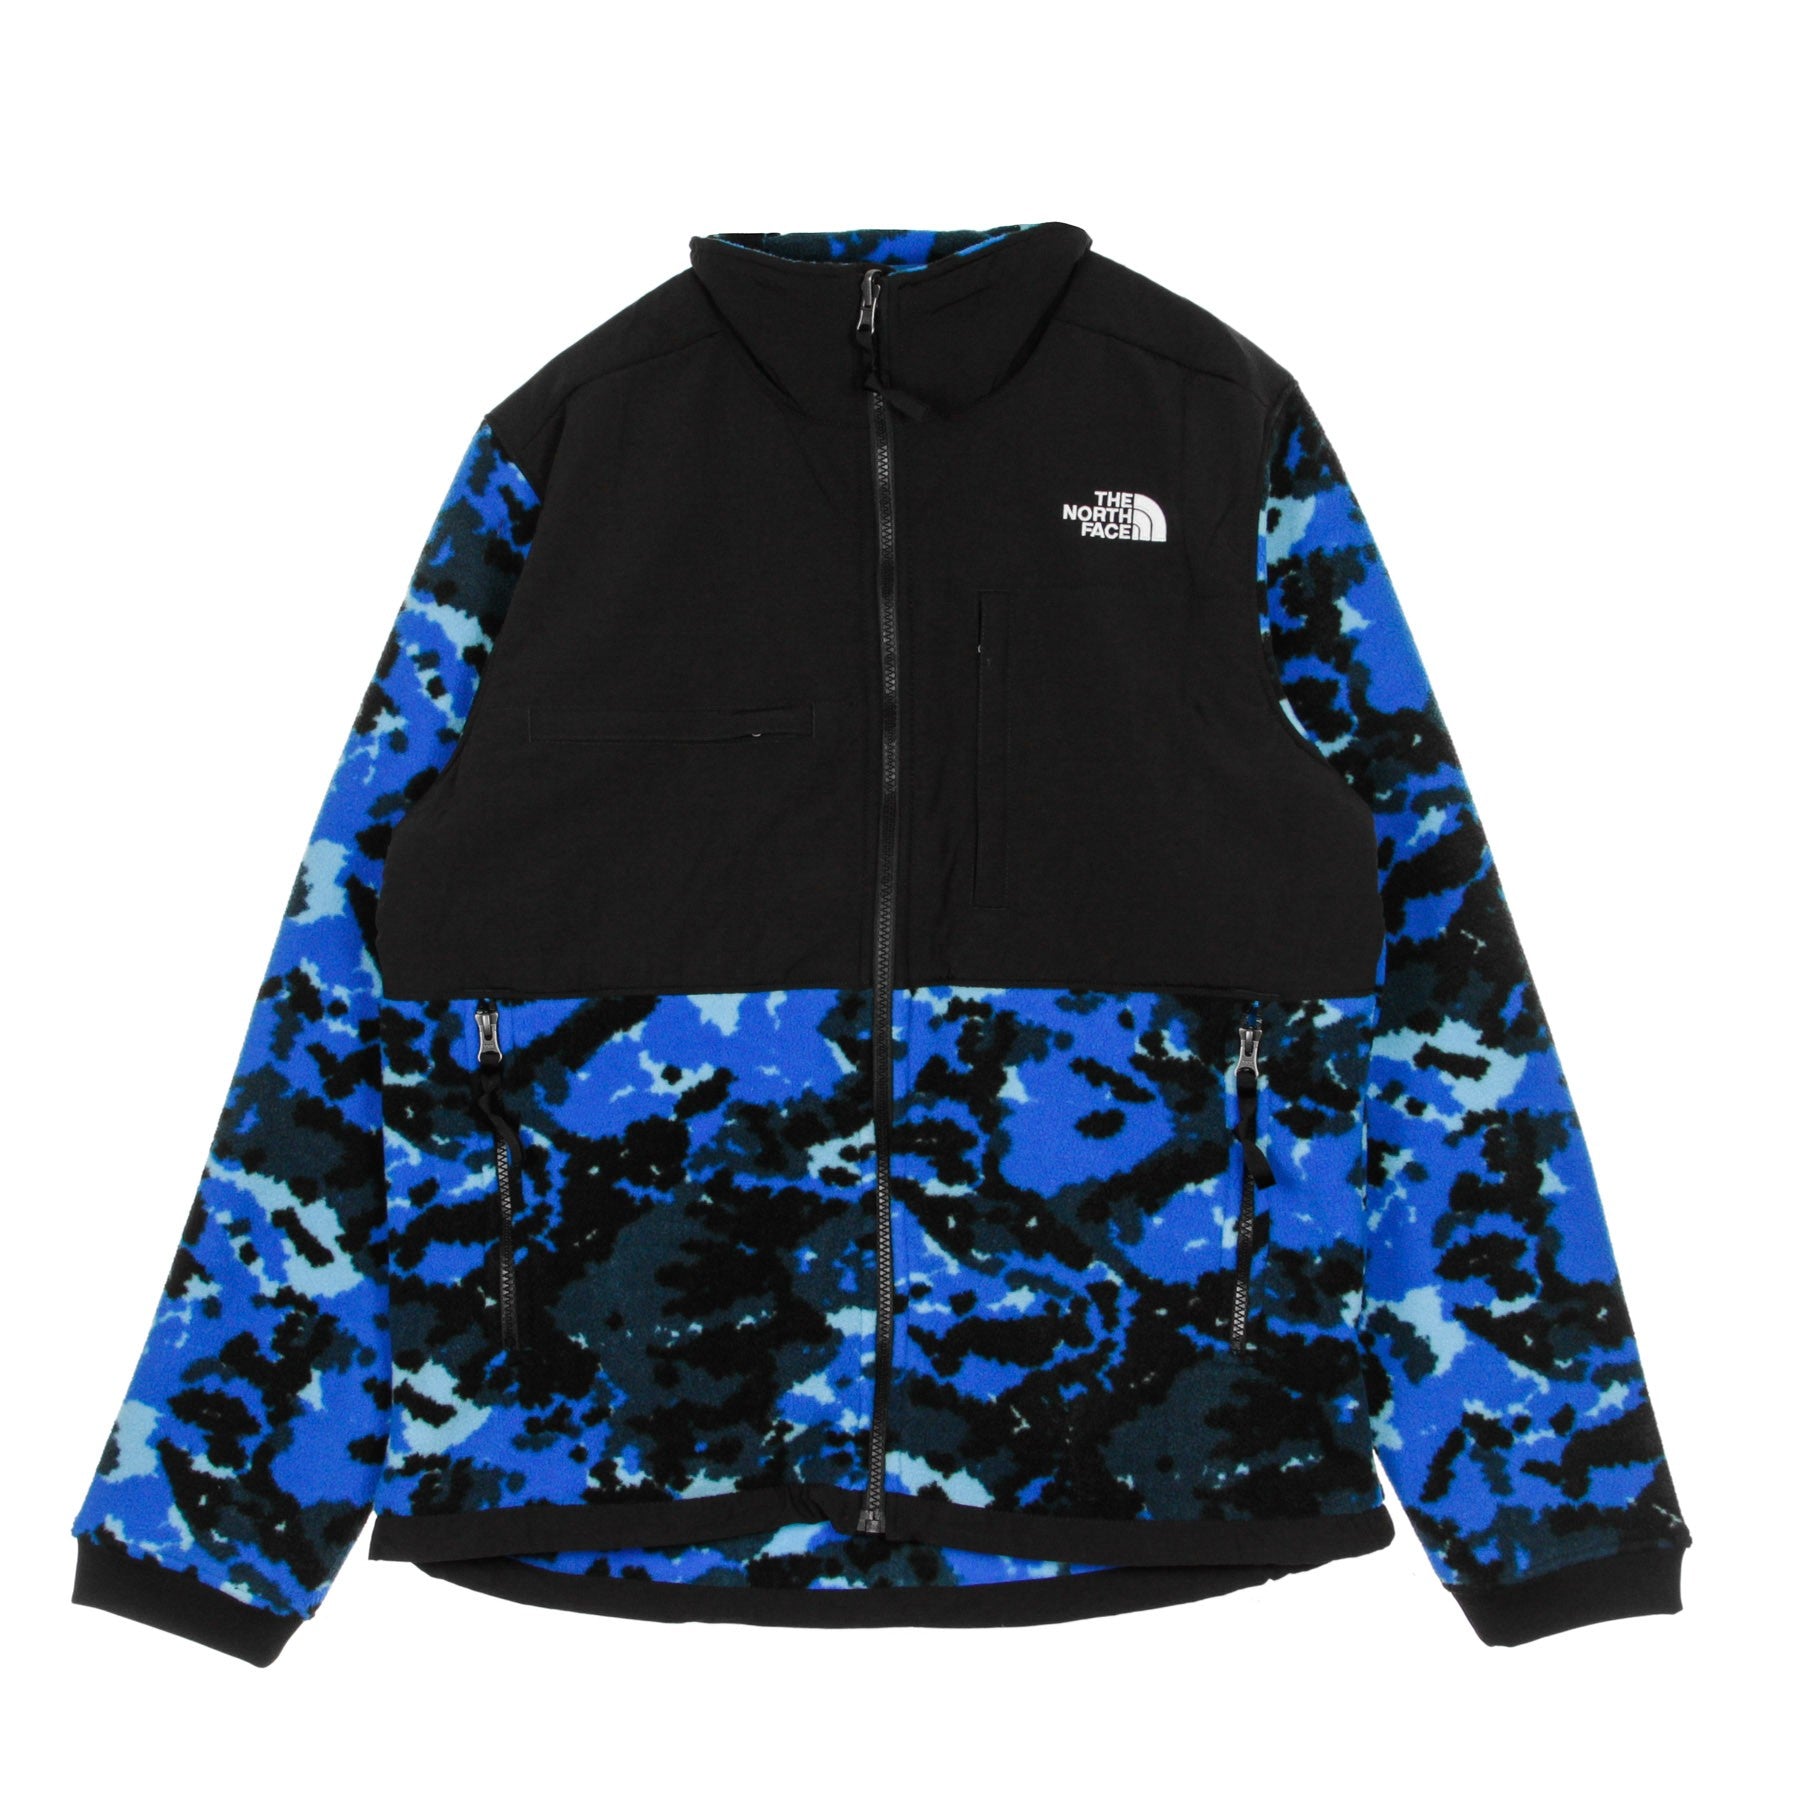 Denali 2 Jacket Men's Fleece Jacket Clear Lake Blue Himalayan Camo Print